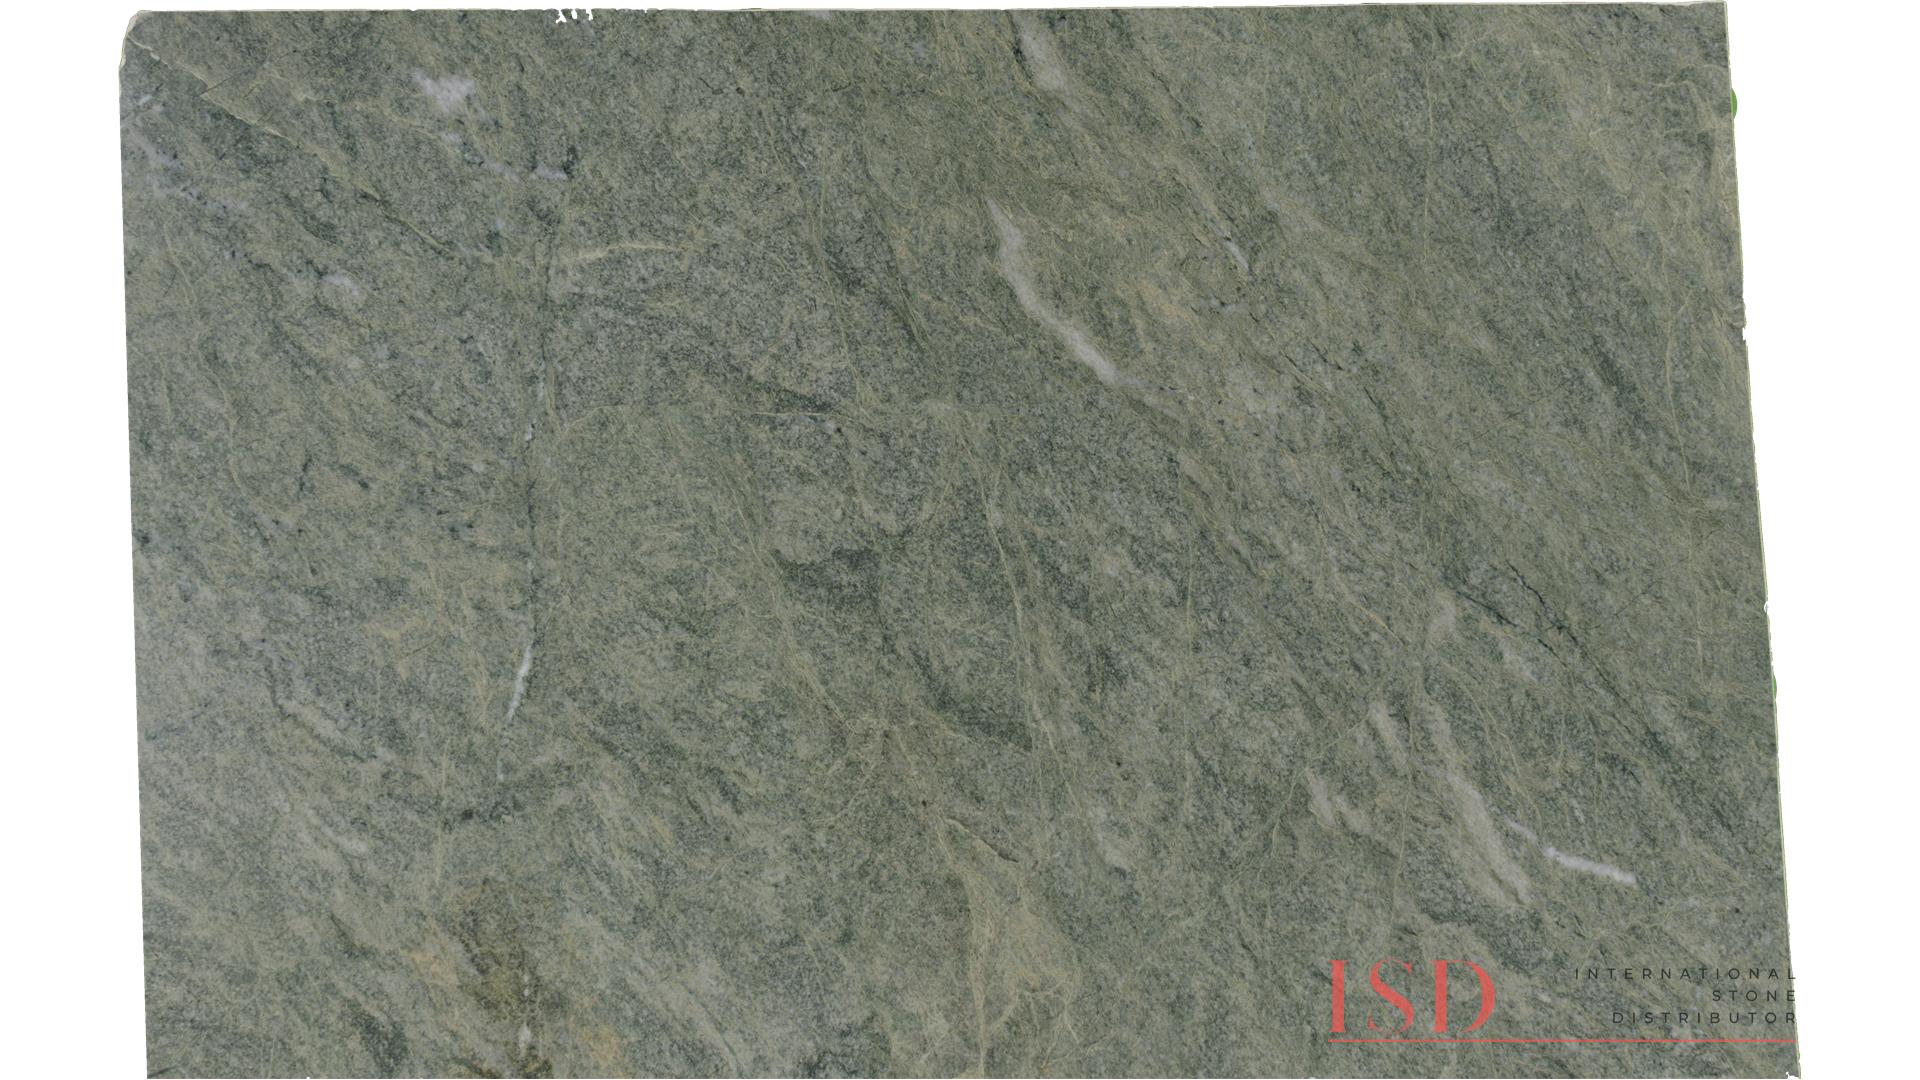 Costa Smeralda Granite Slabs